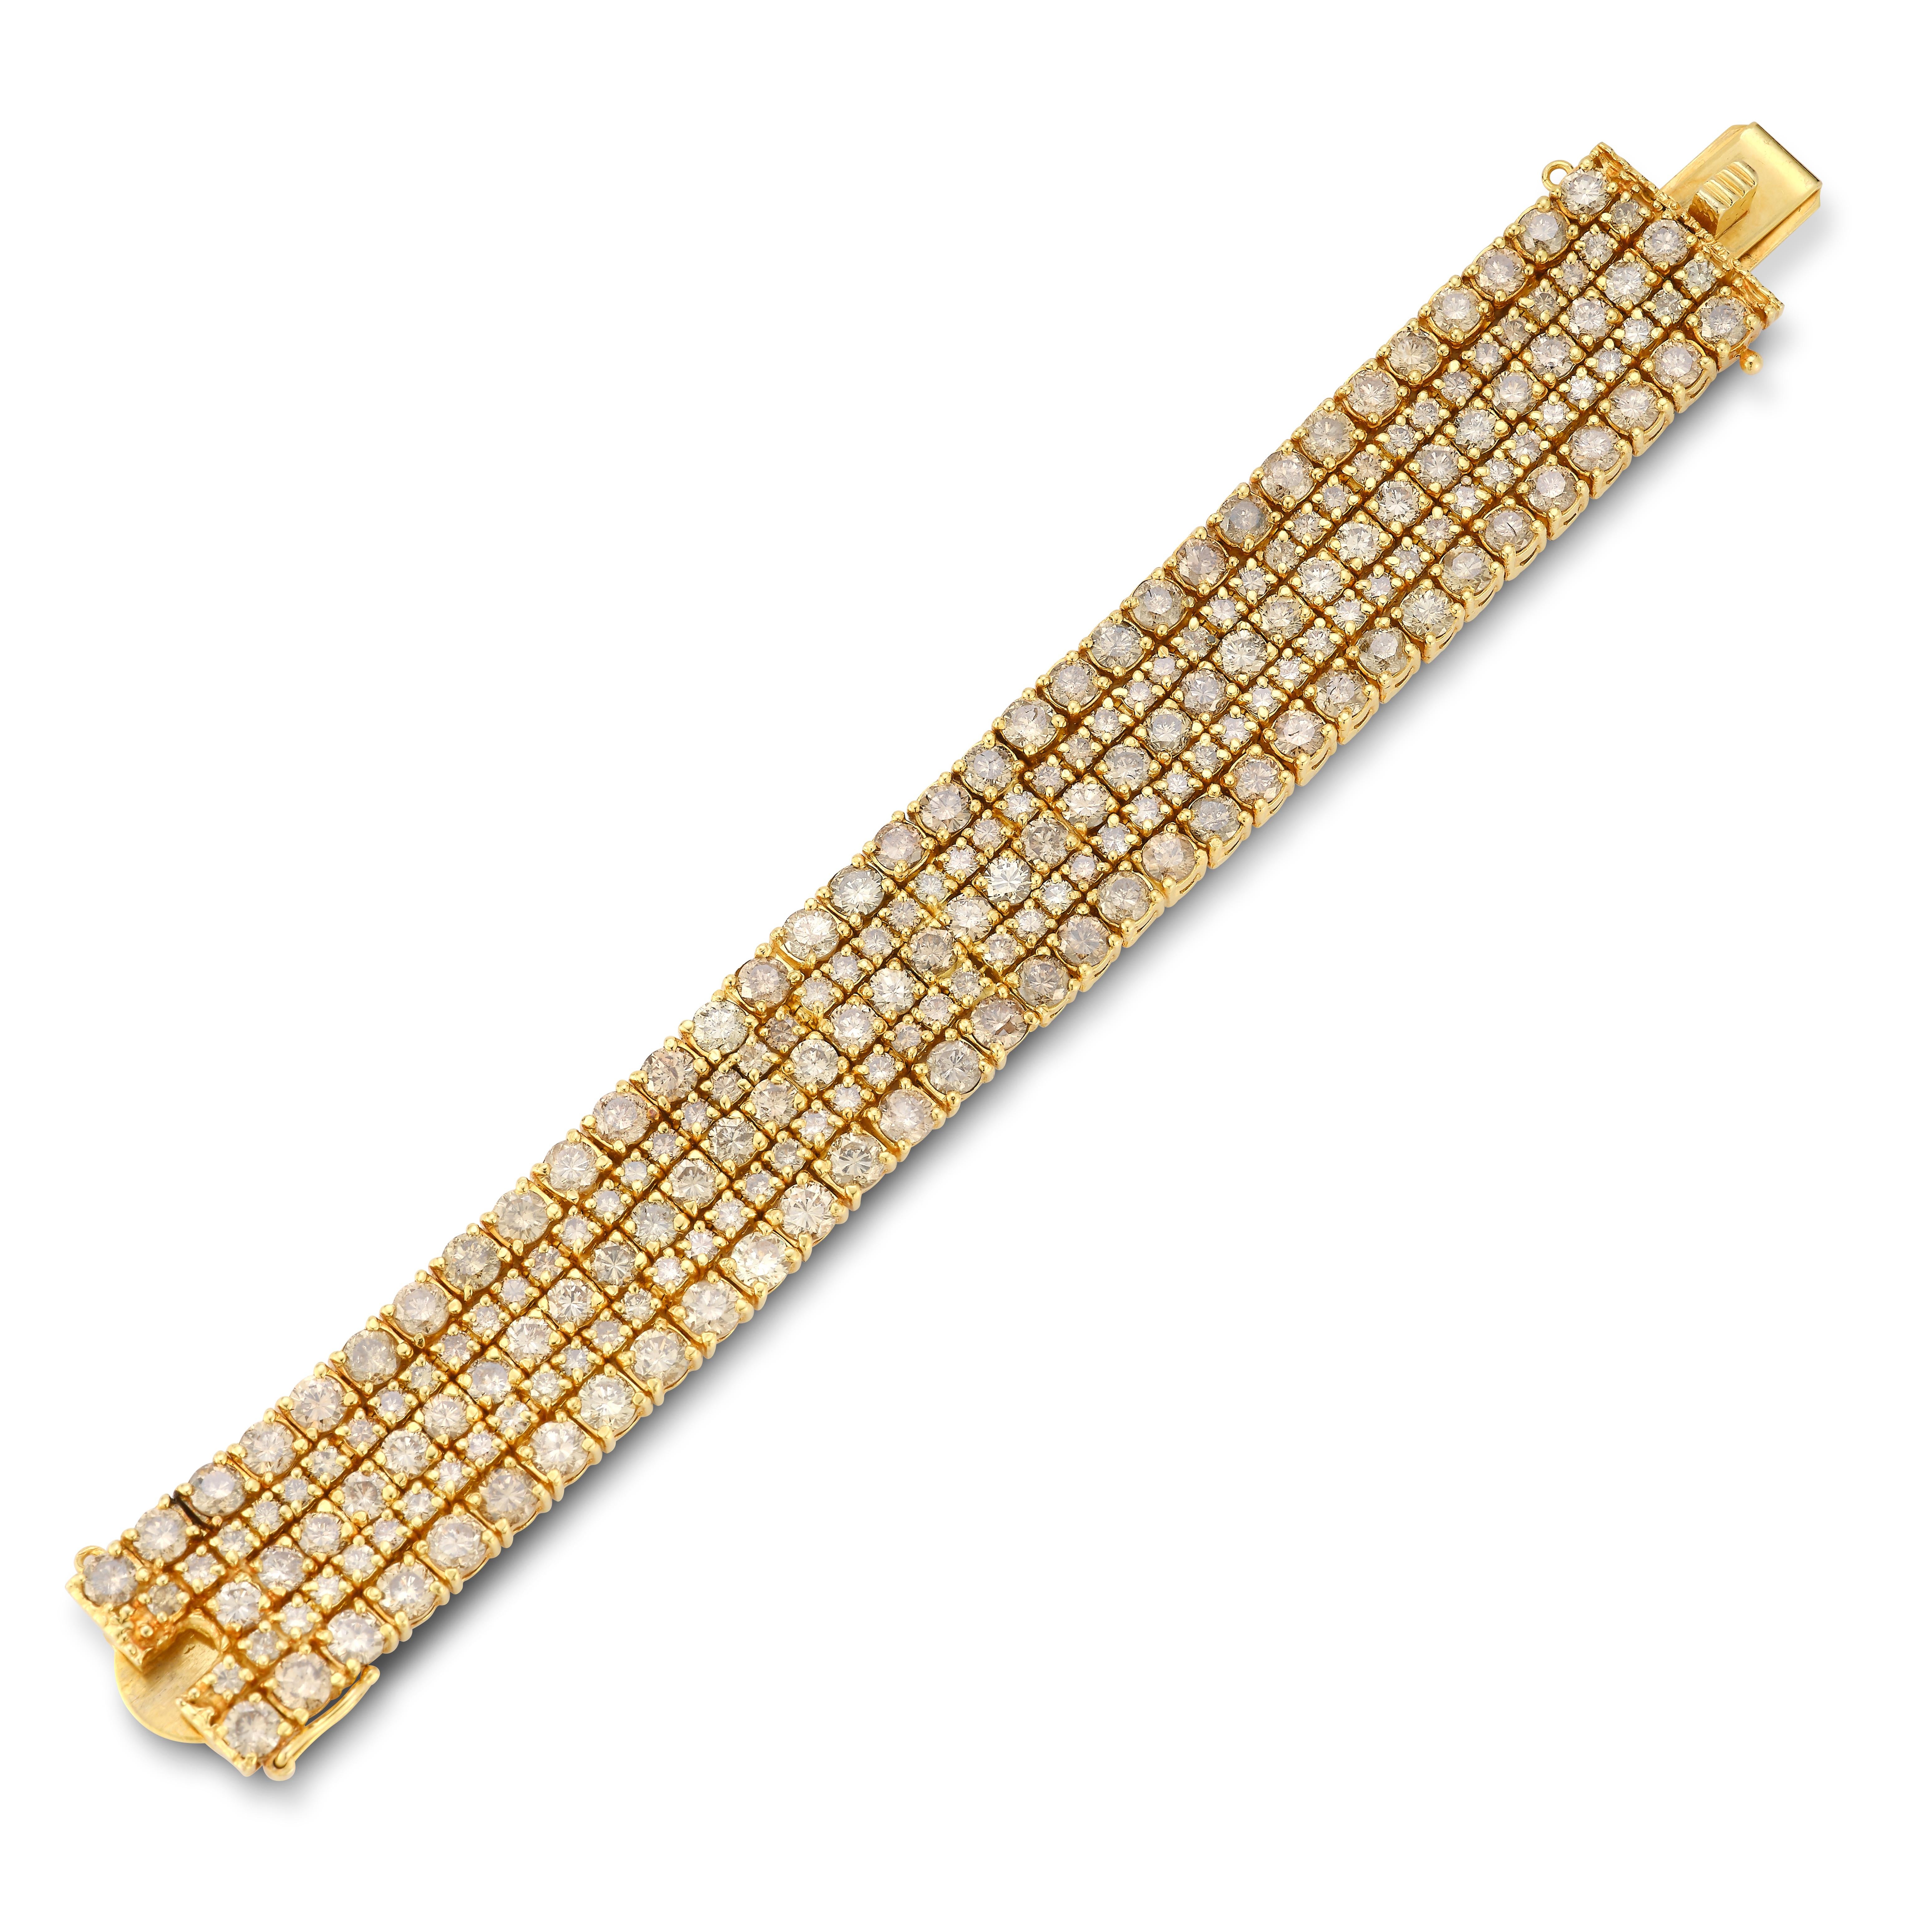 Men's Diamond Bracelet 

Approx 41.40 ct diamonds

Made Circa 1970

6 3/4 inches long

14 Karat yellow gold